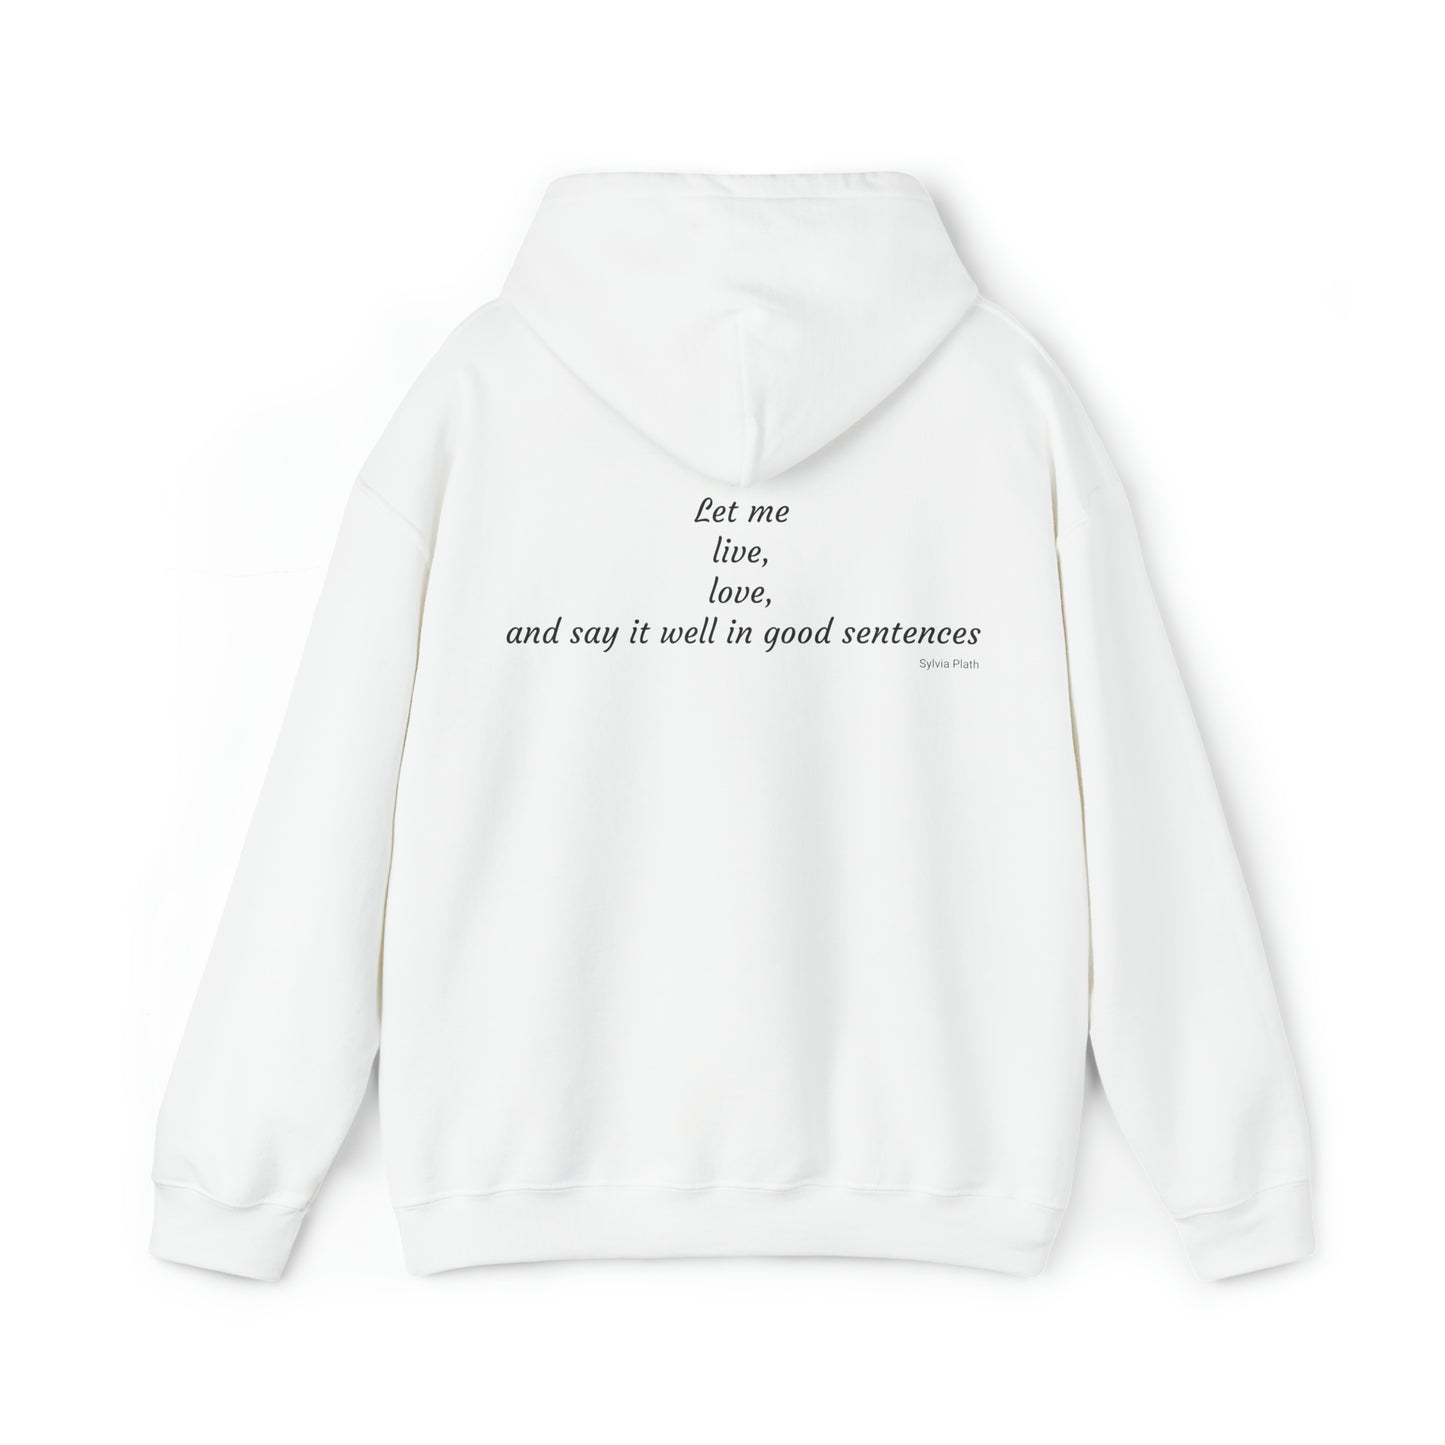 Say it well in good sentences sweatshirt